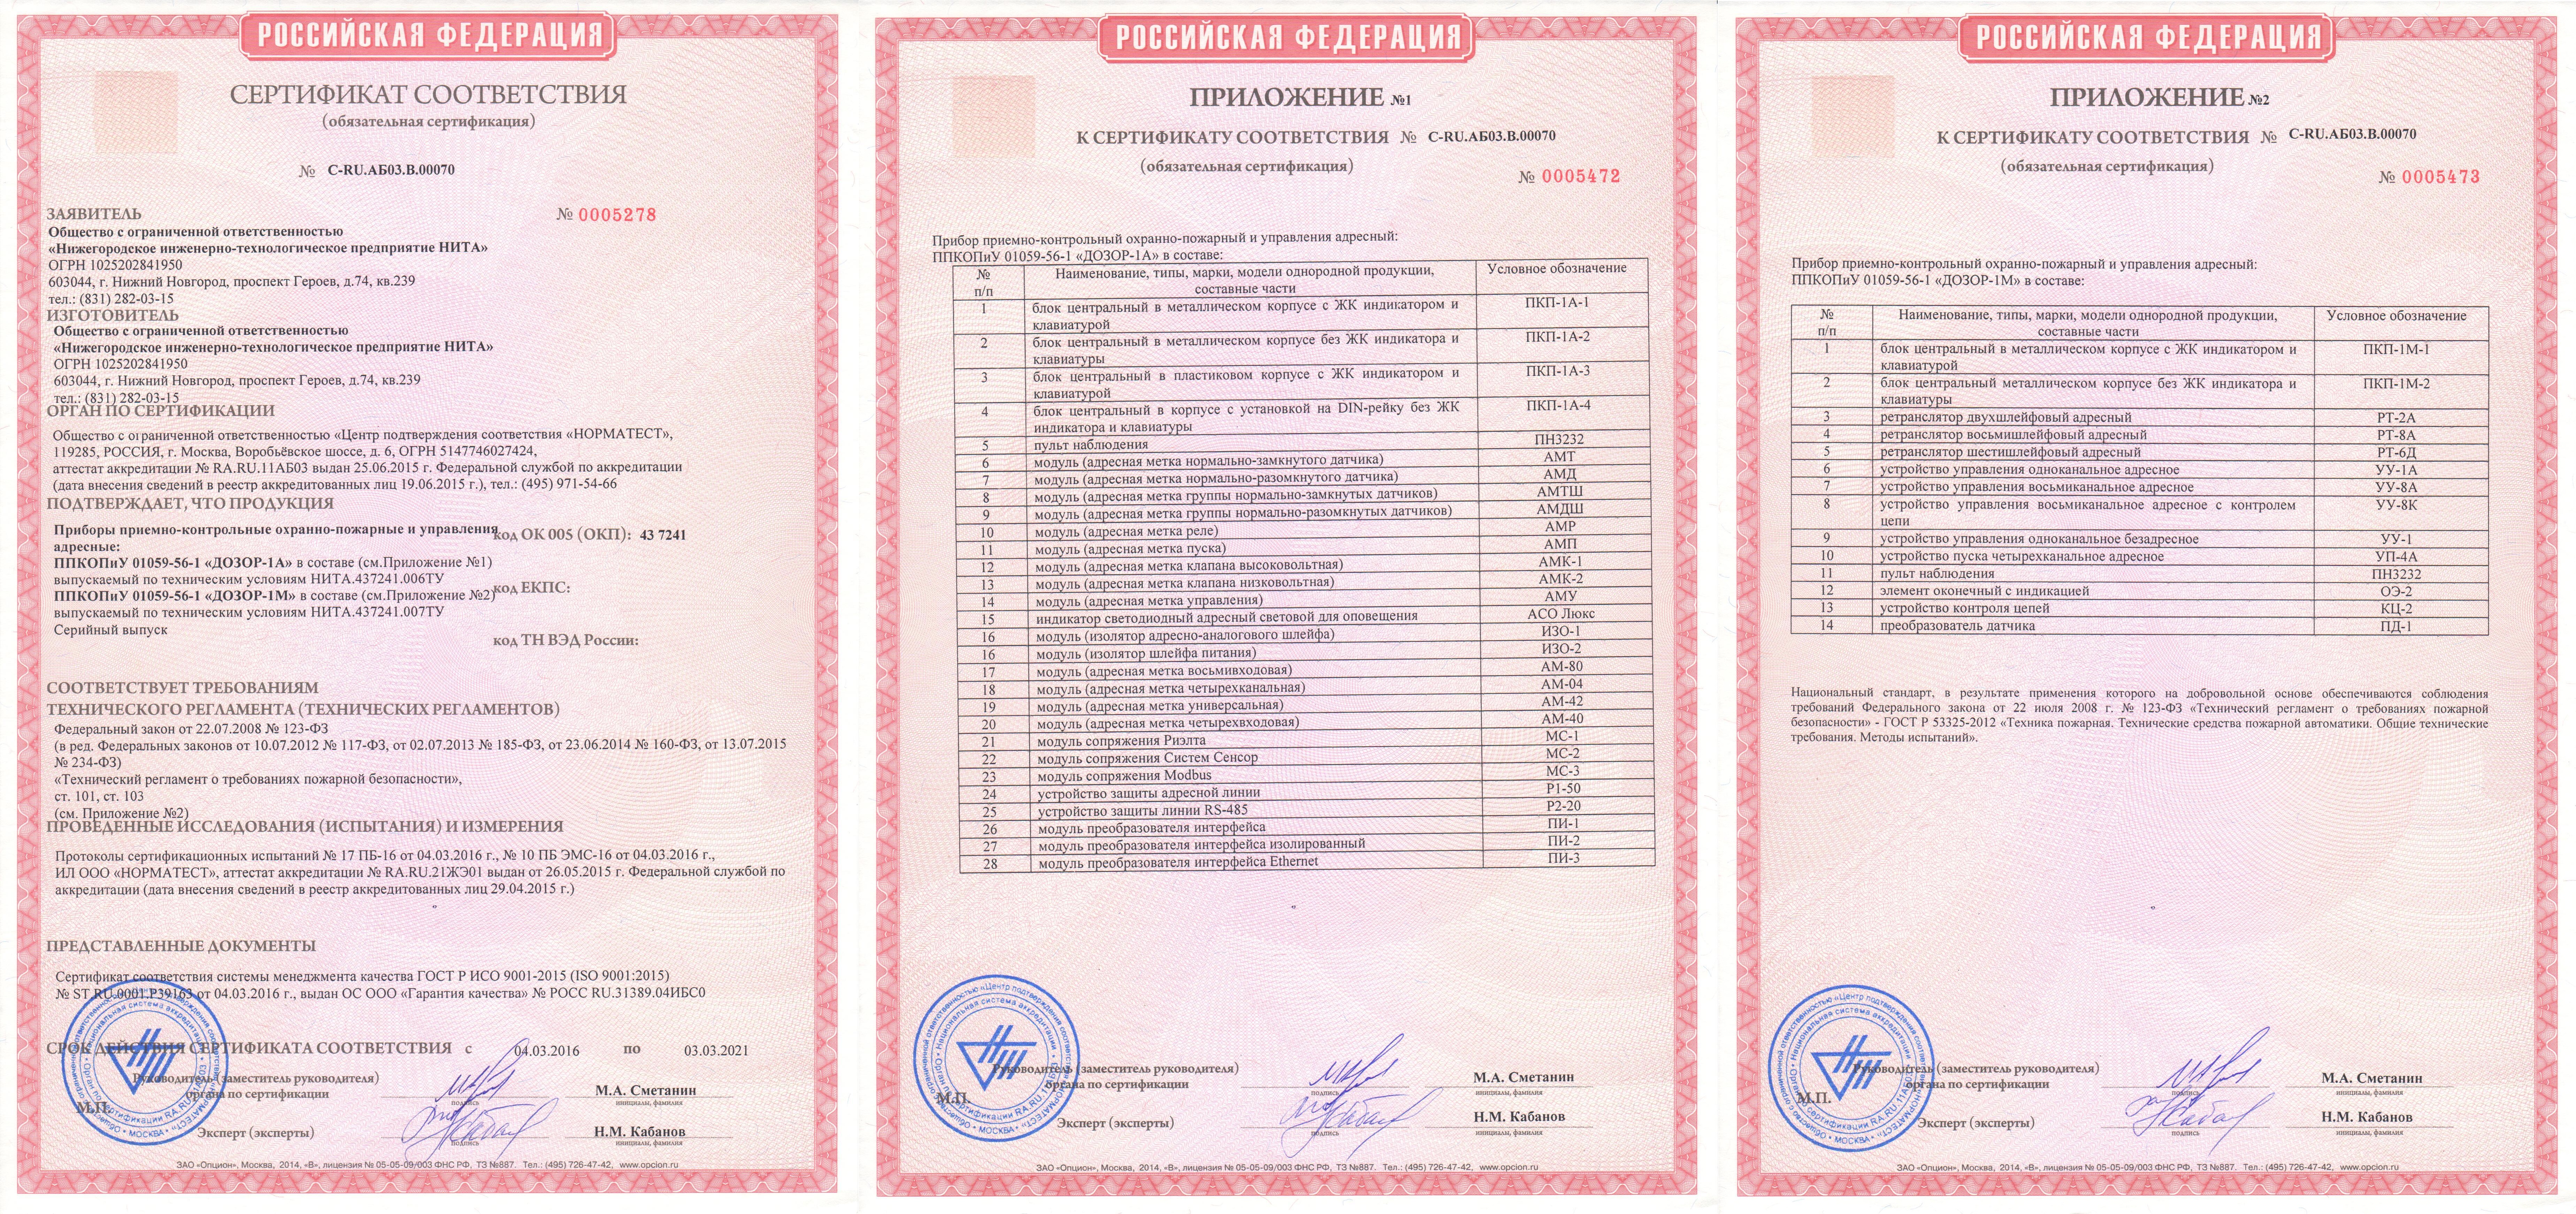 Сертифакат соответствия Дозор-1А